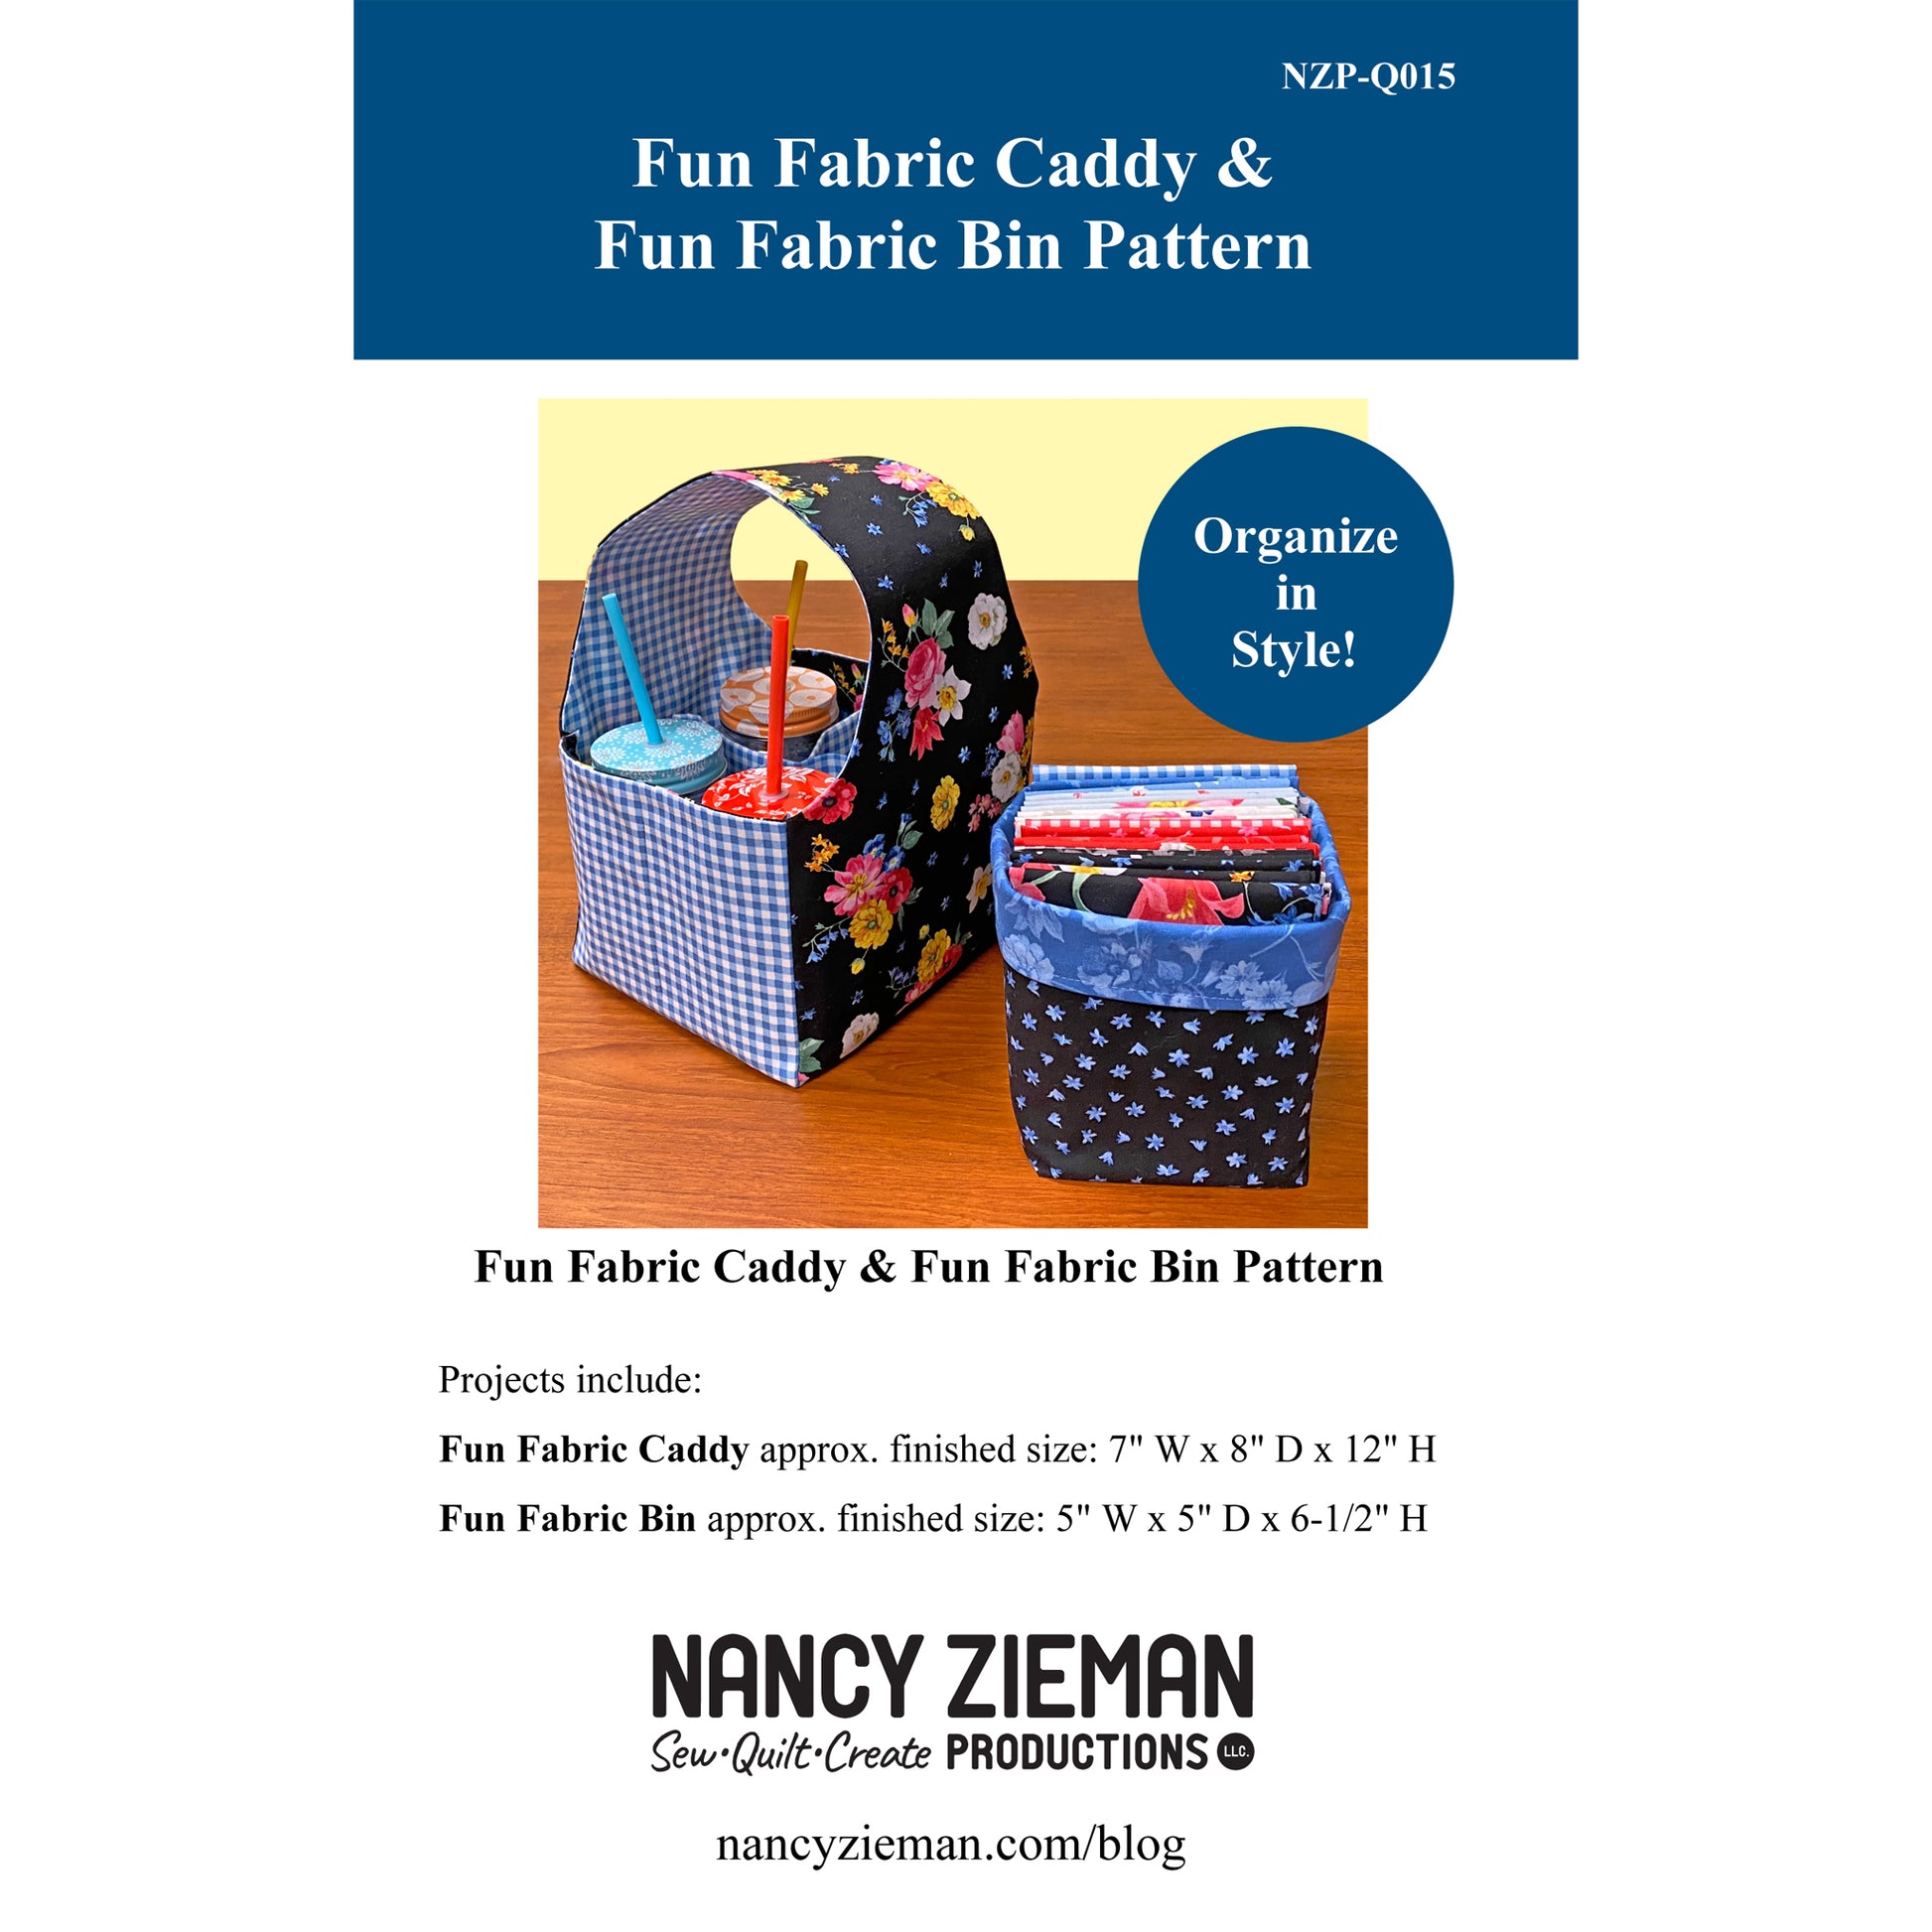 Cover image of pattern for "Fun Fabric Caddy and Fun Fabric Bin Pattern".